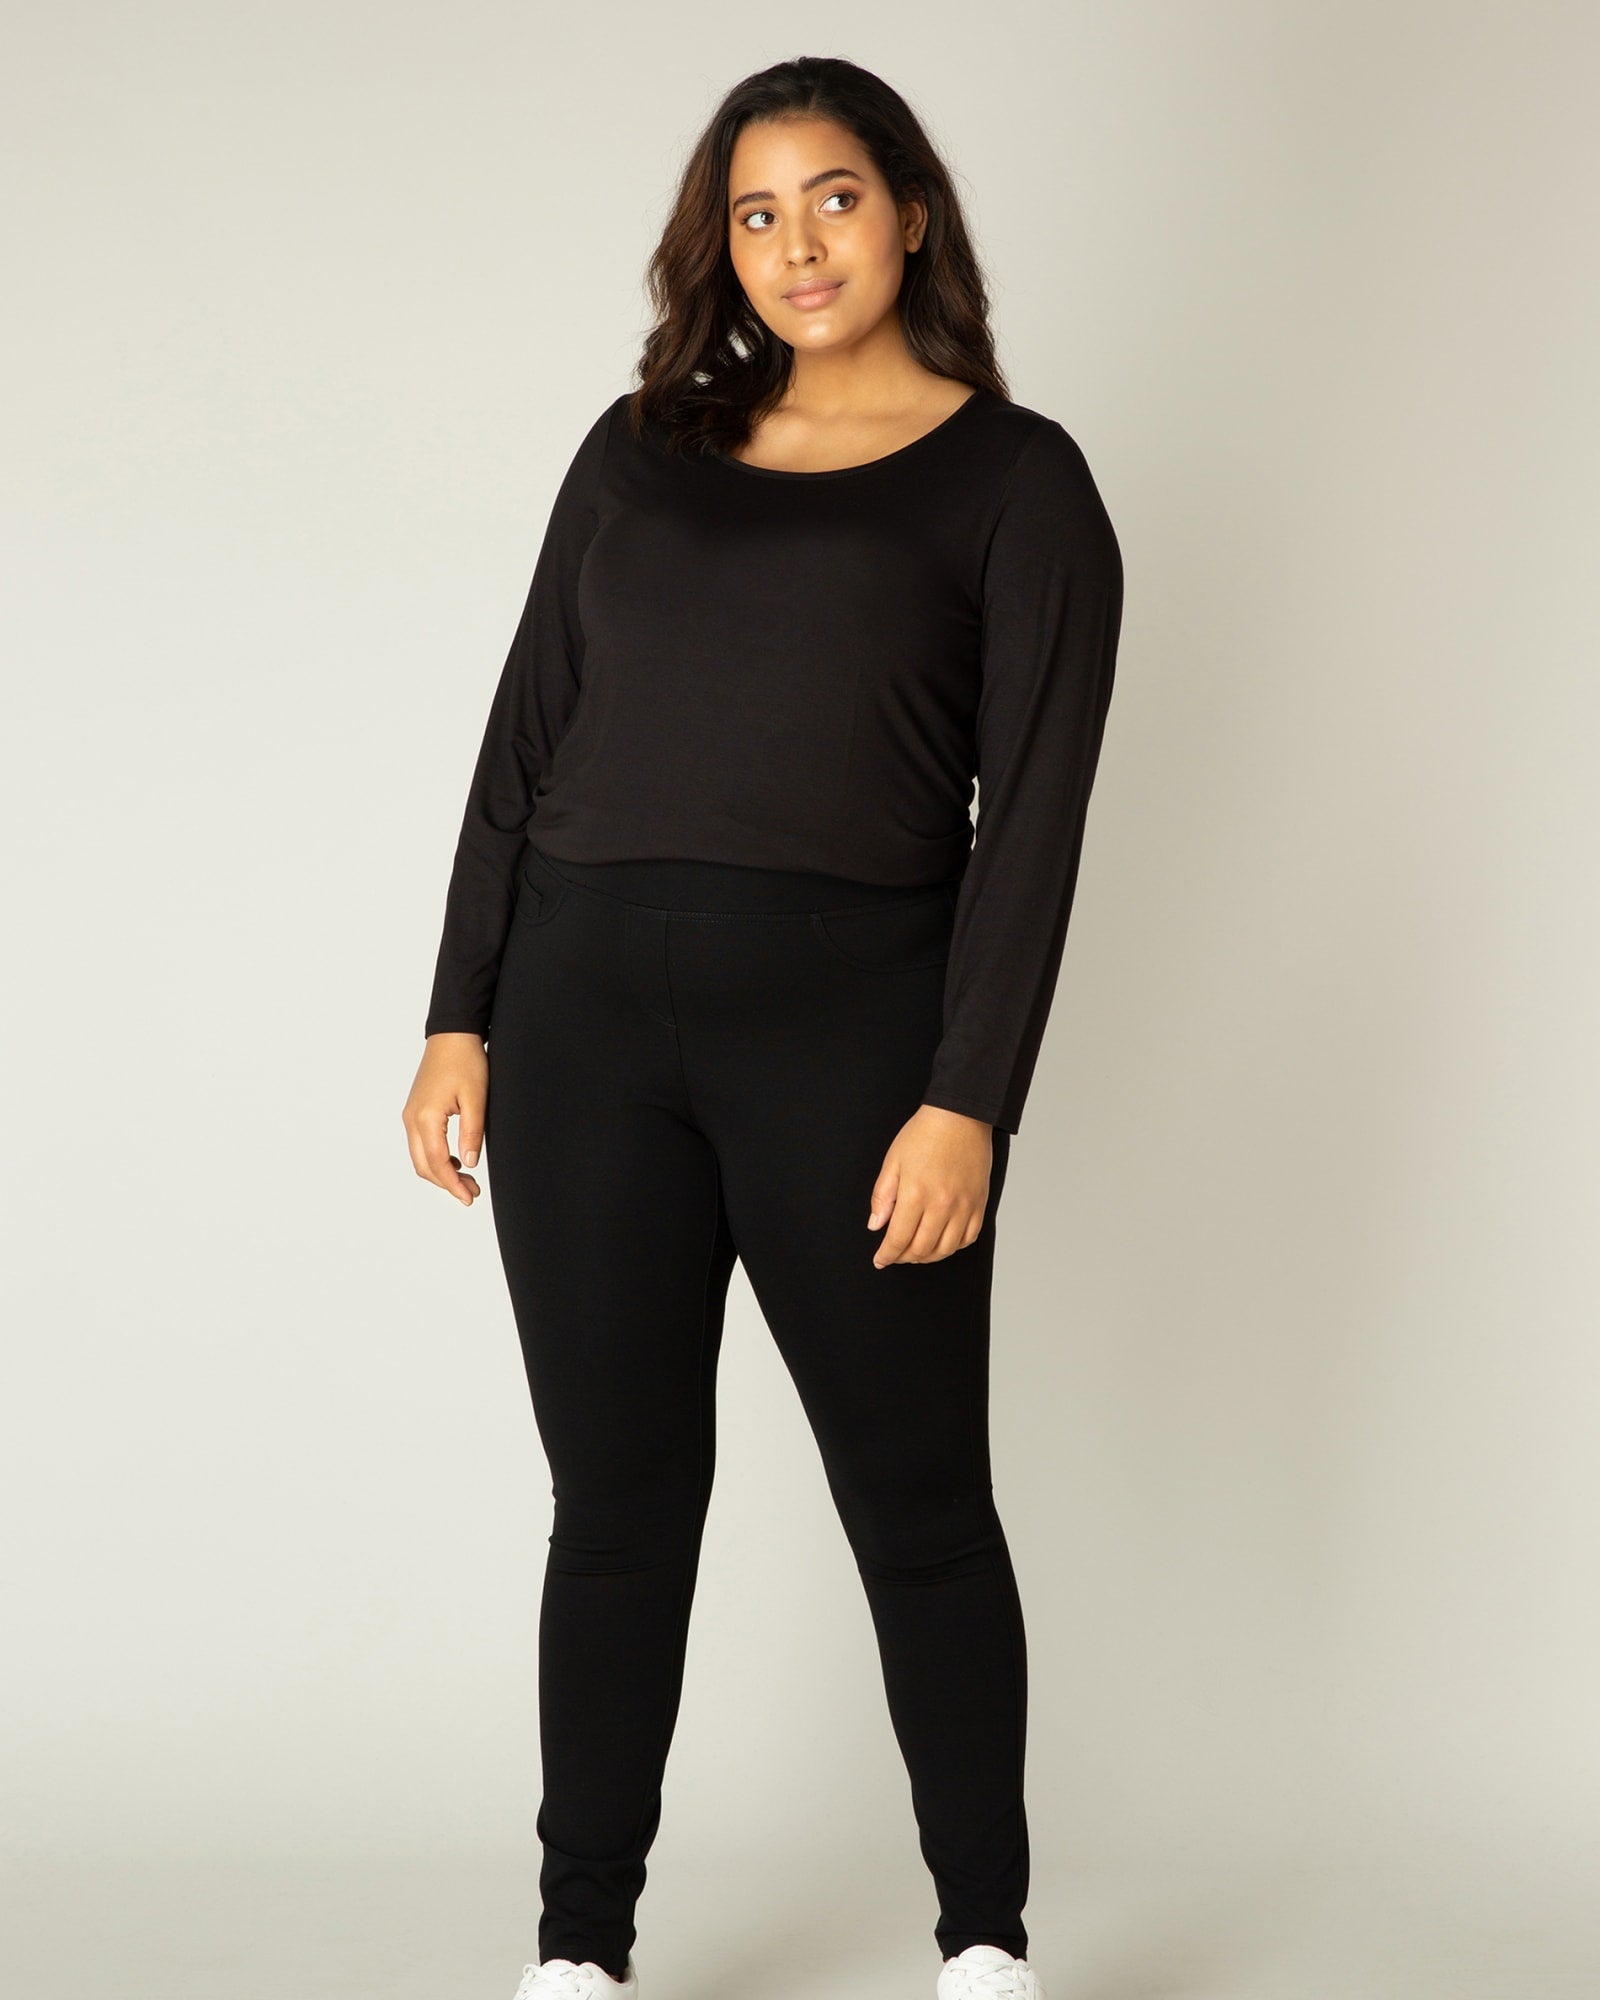 HUE Women's Fashion Sequin Front Ponte Leggings Black Size 1X